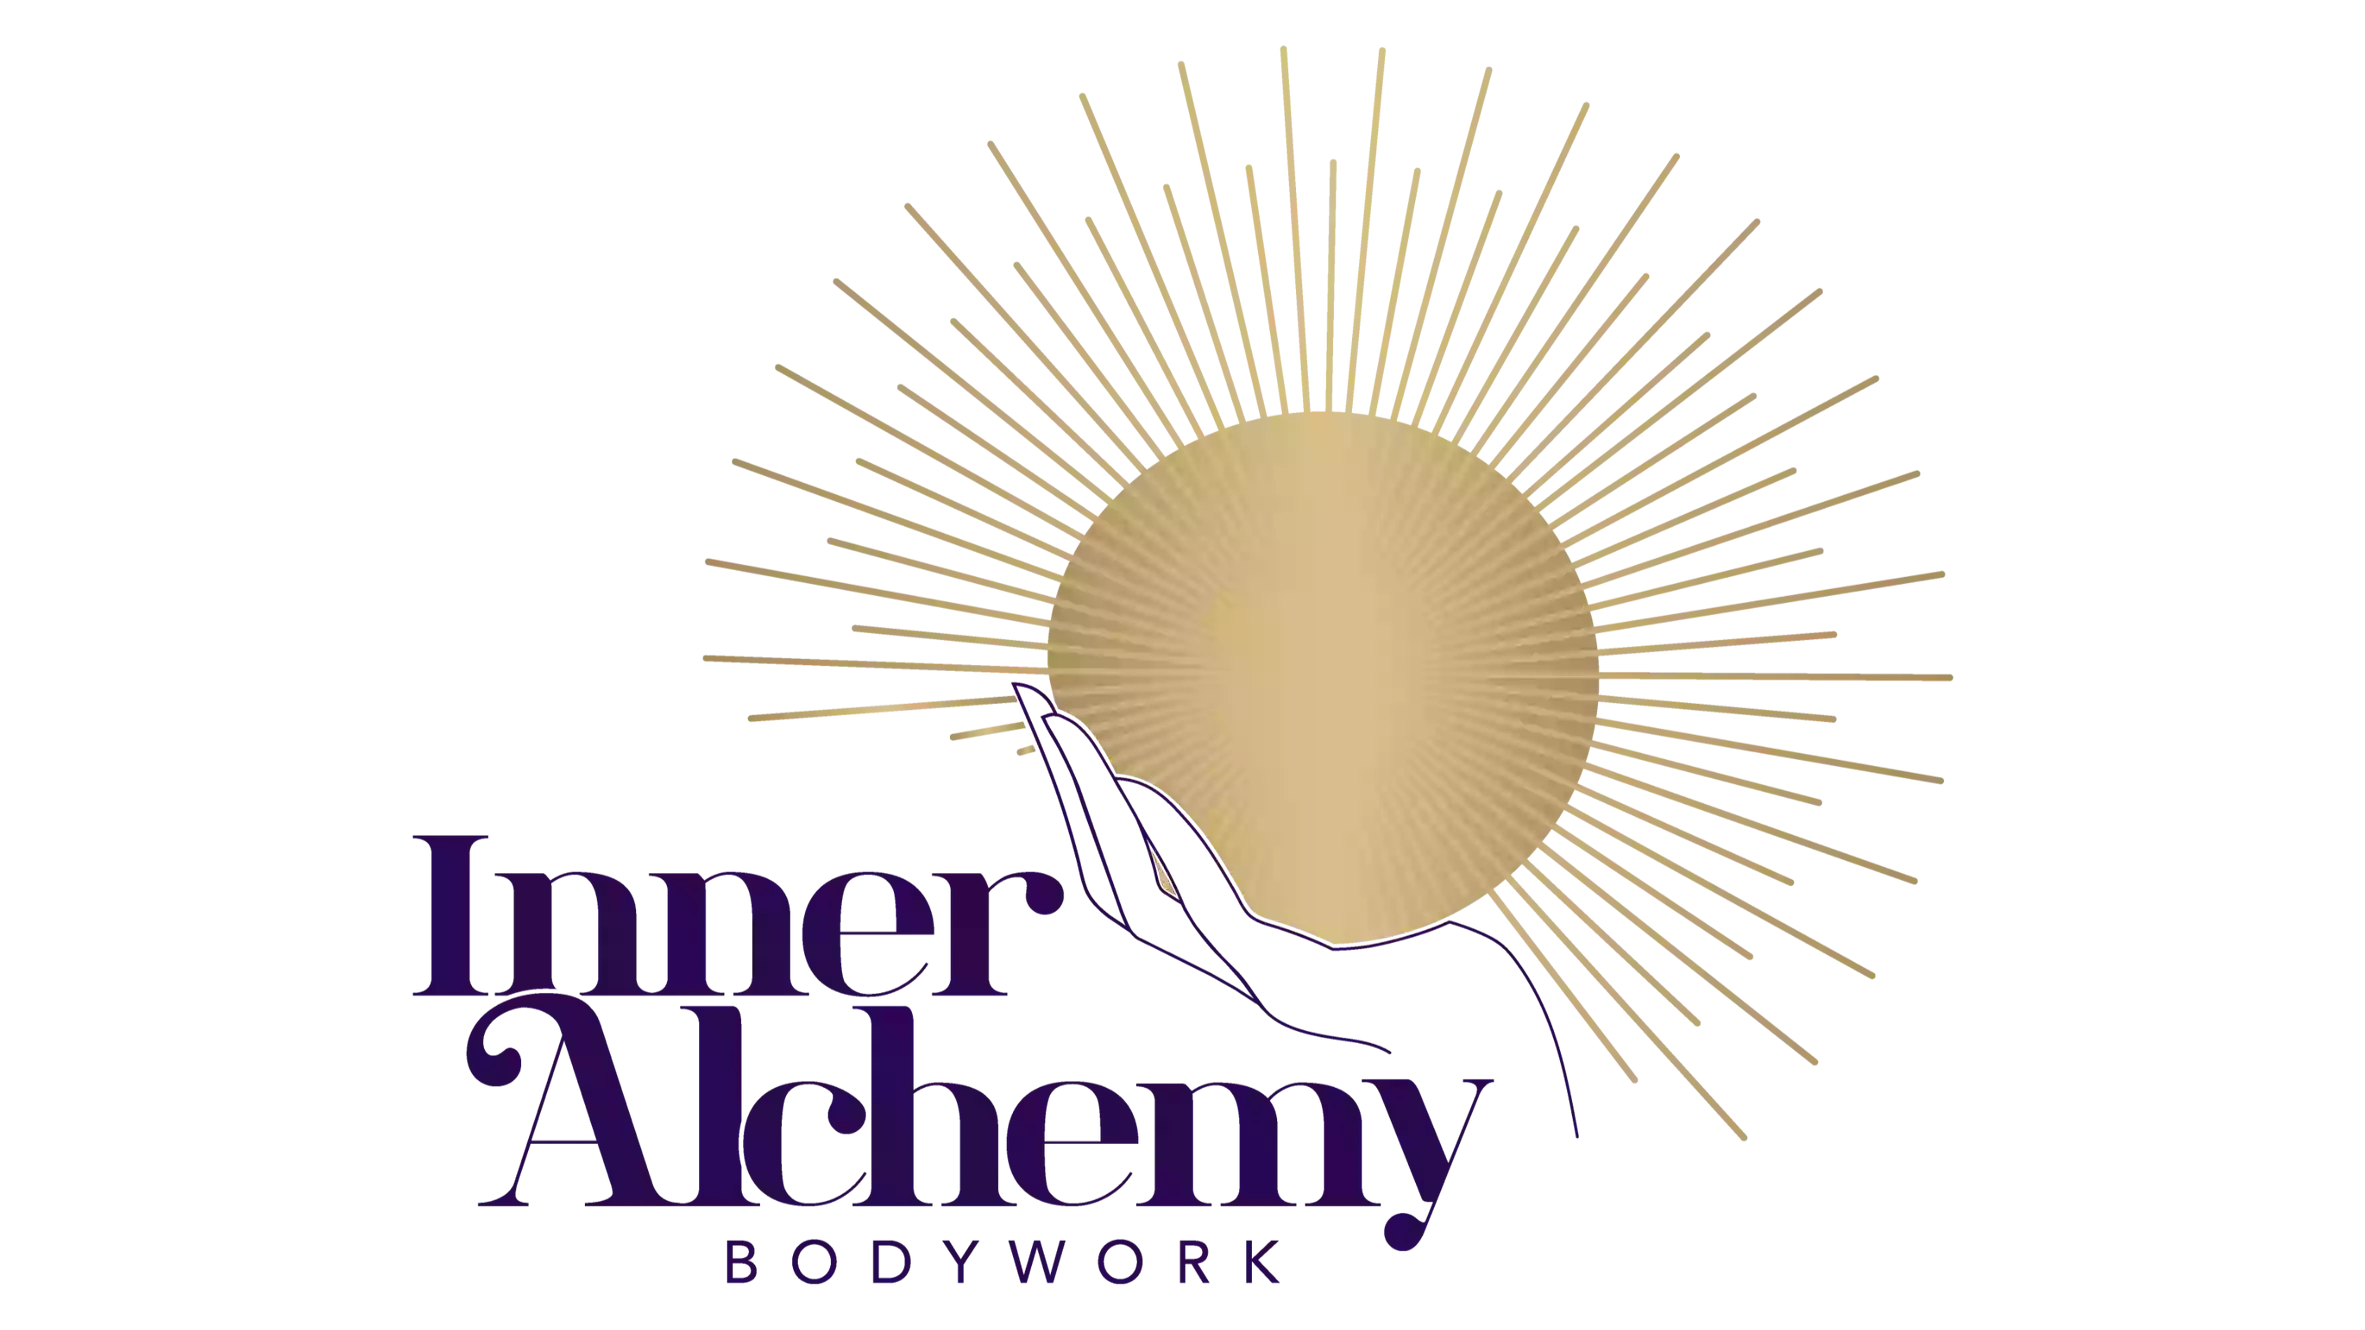 Inner Alchemy Bodywork